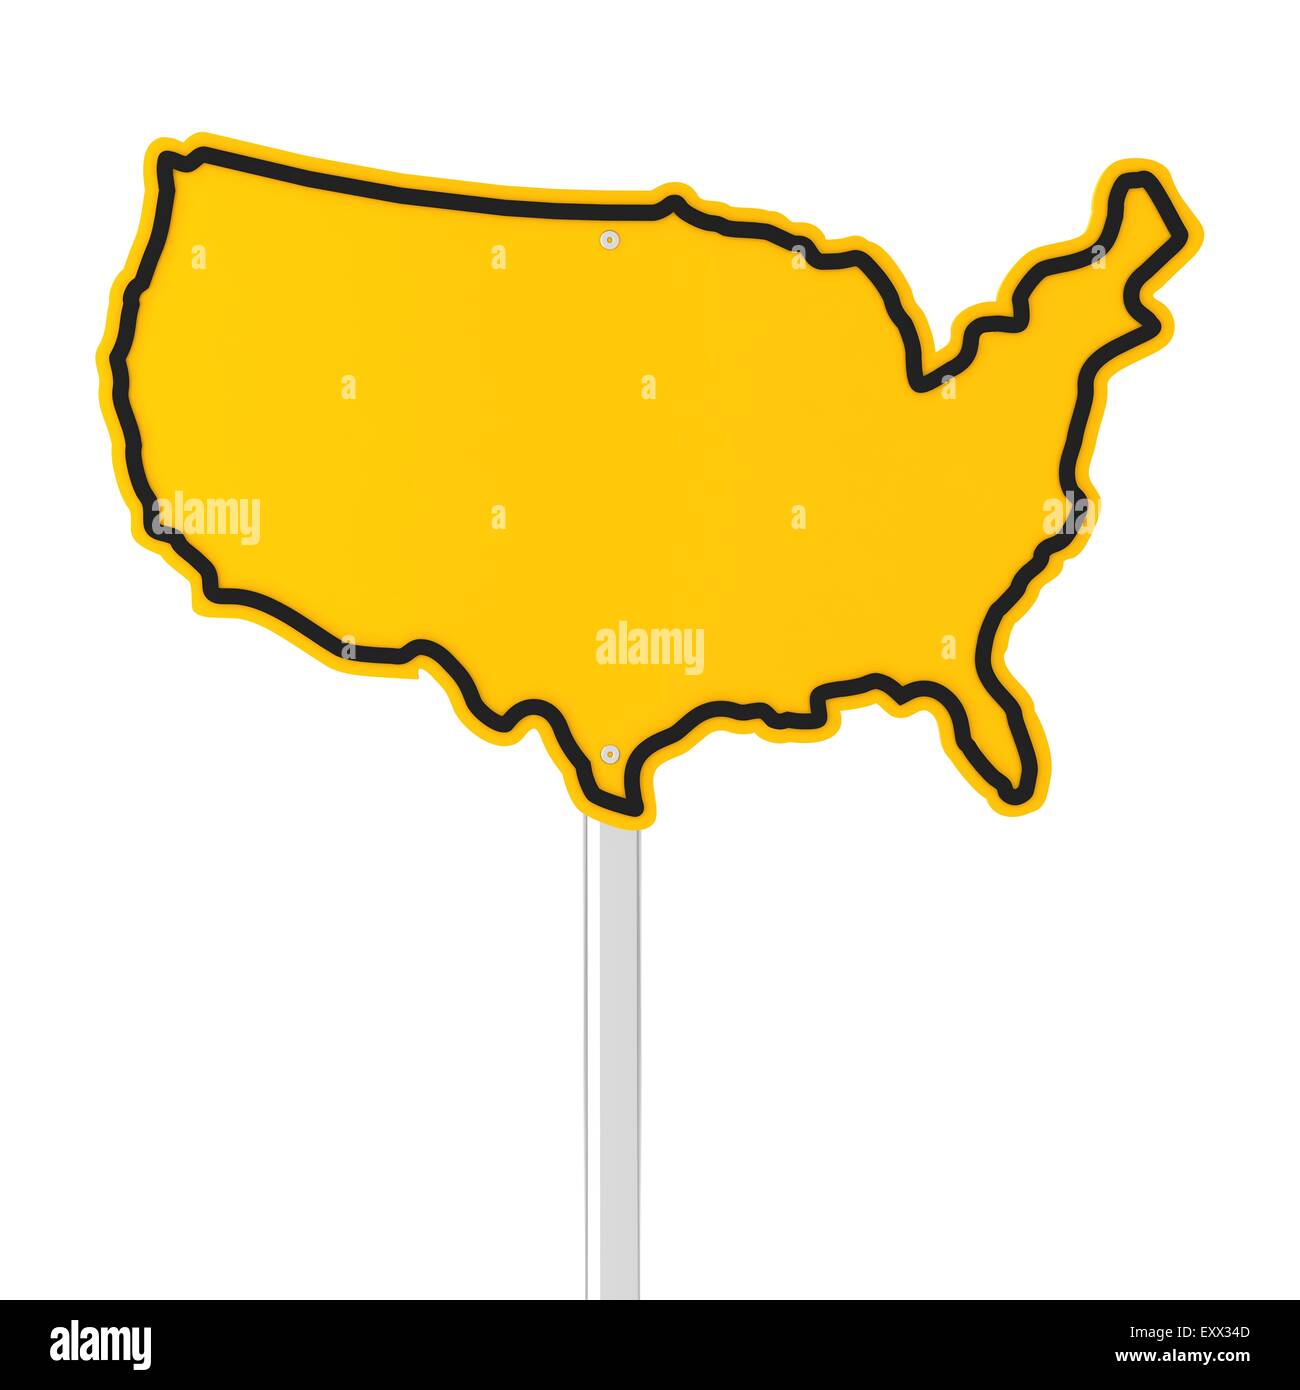 USA shaped road sign Stock Photo